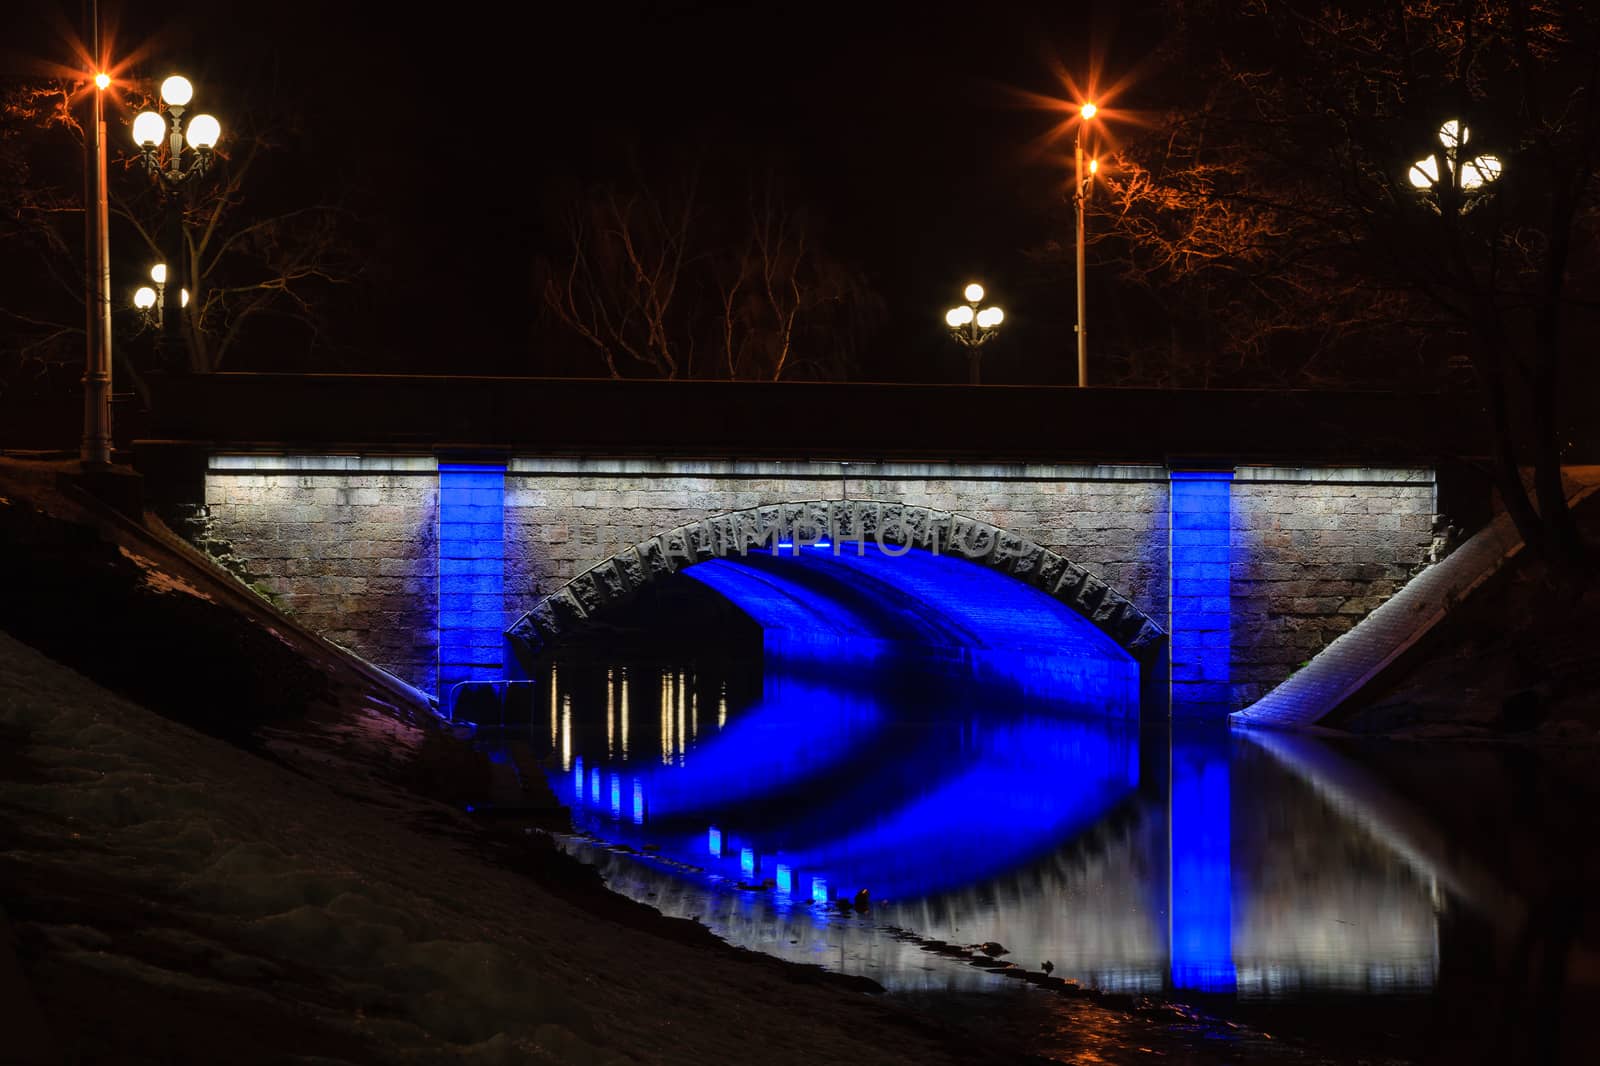 Latvia Canal Bridge by ATGImages